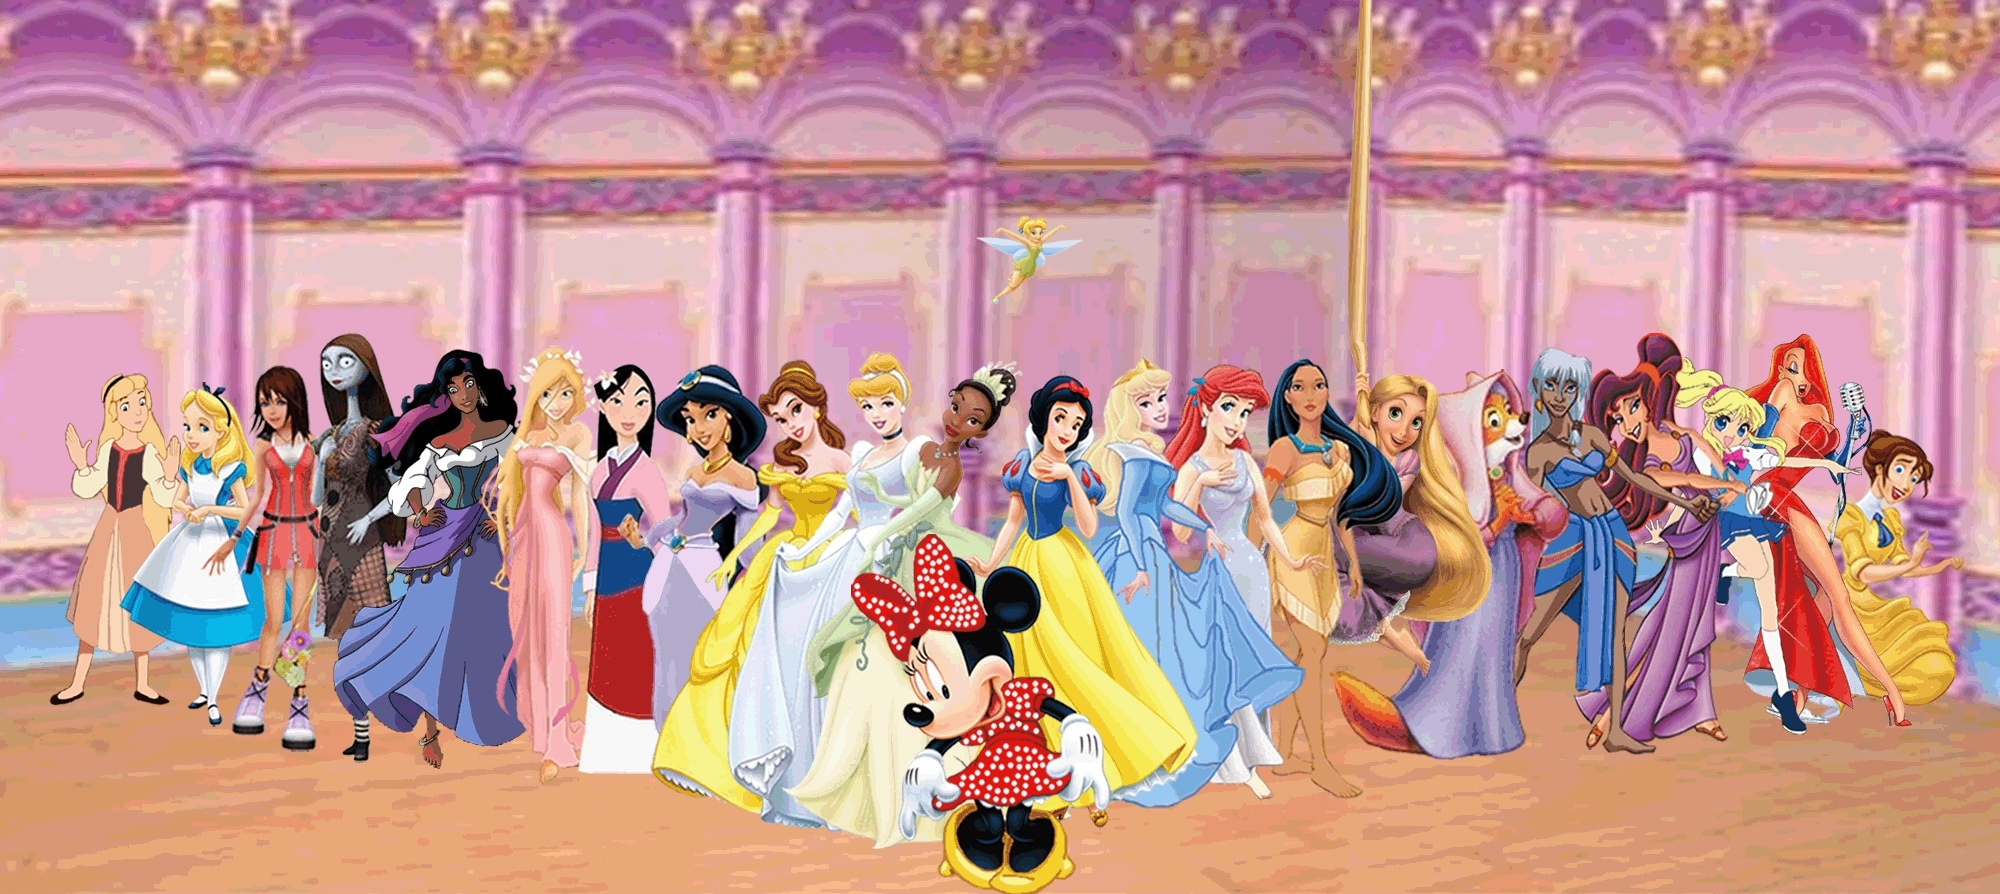 My Top 10 disney princesses and non princesses - Disney Princess